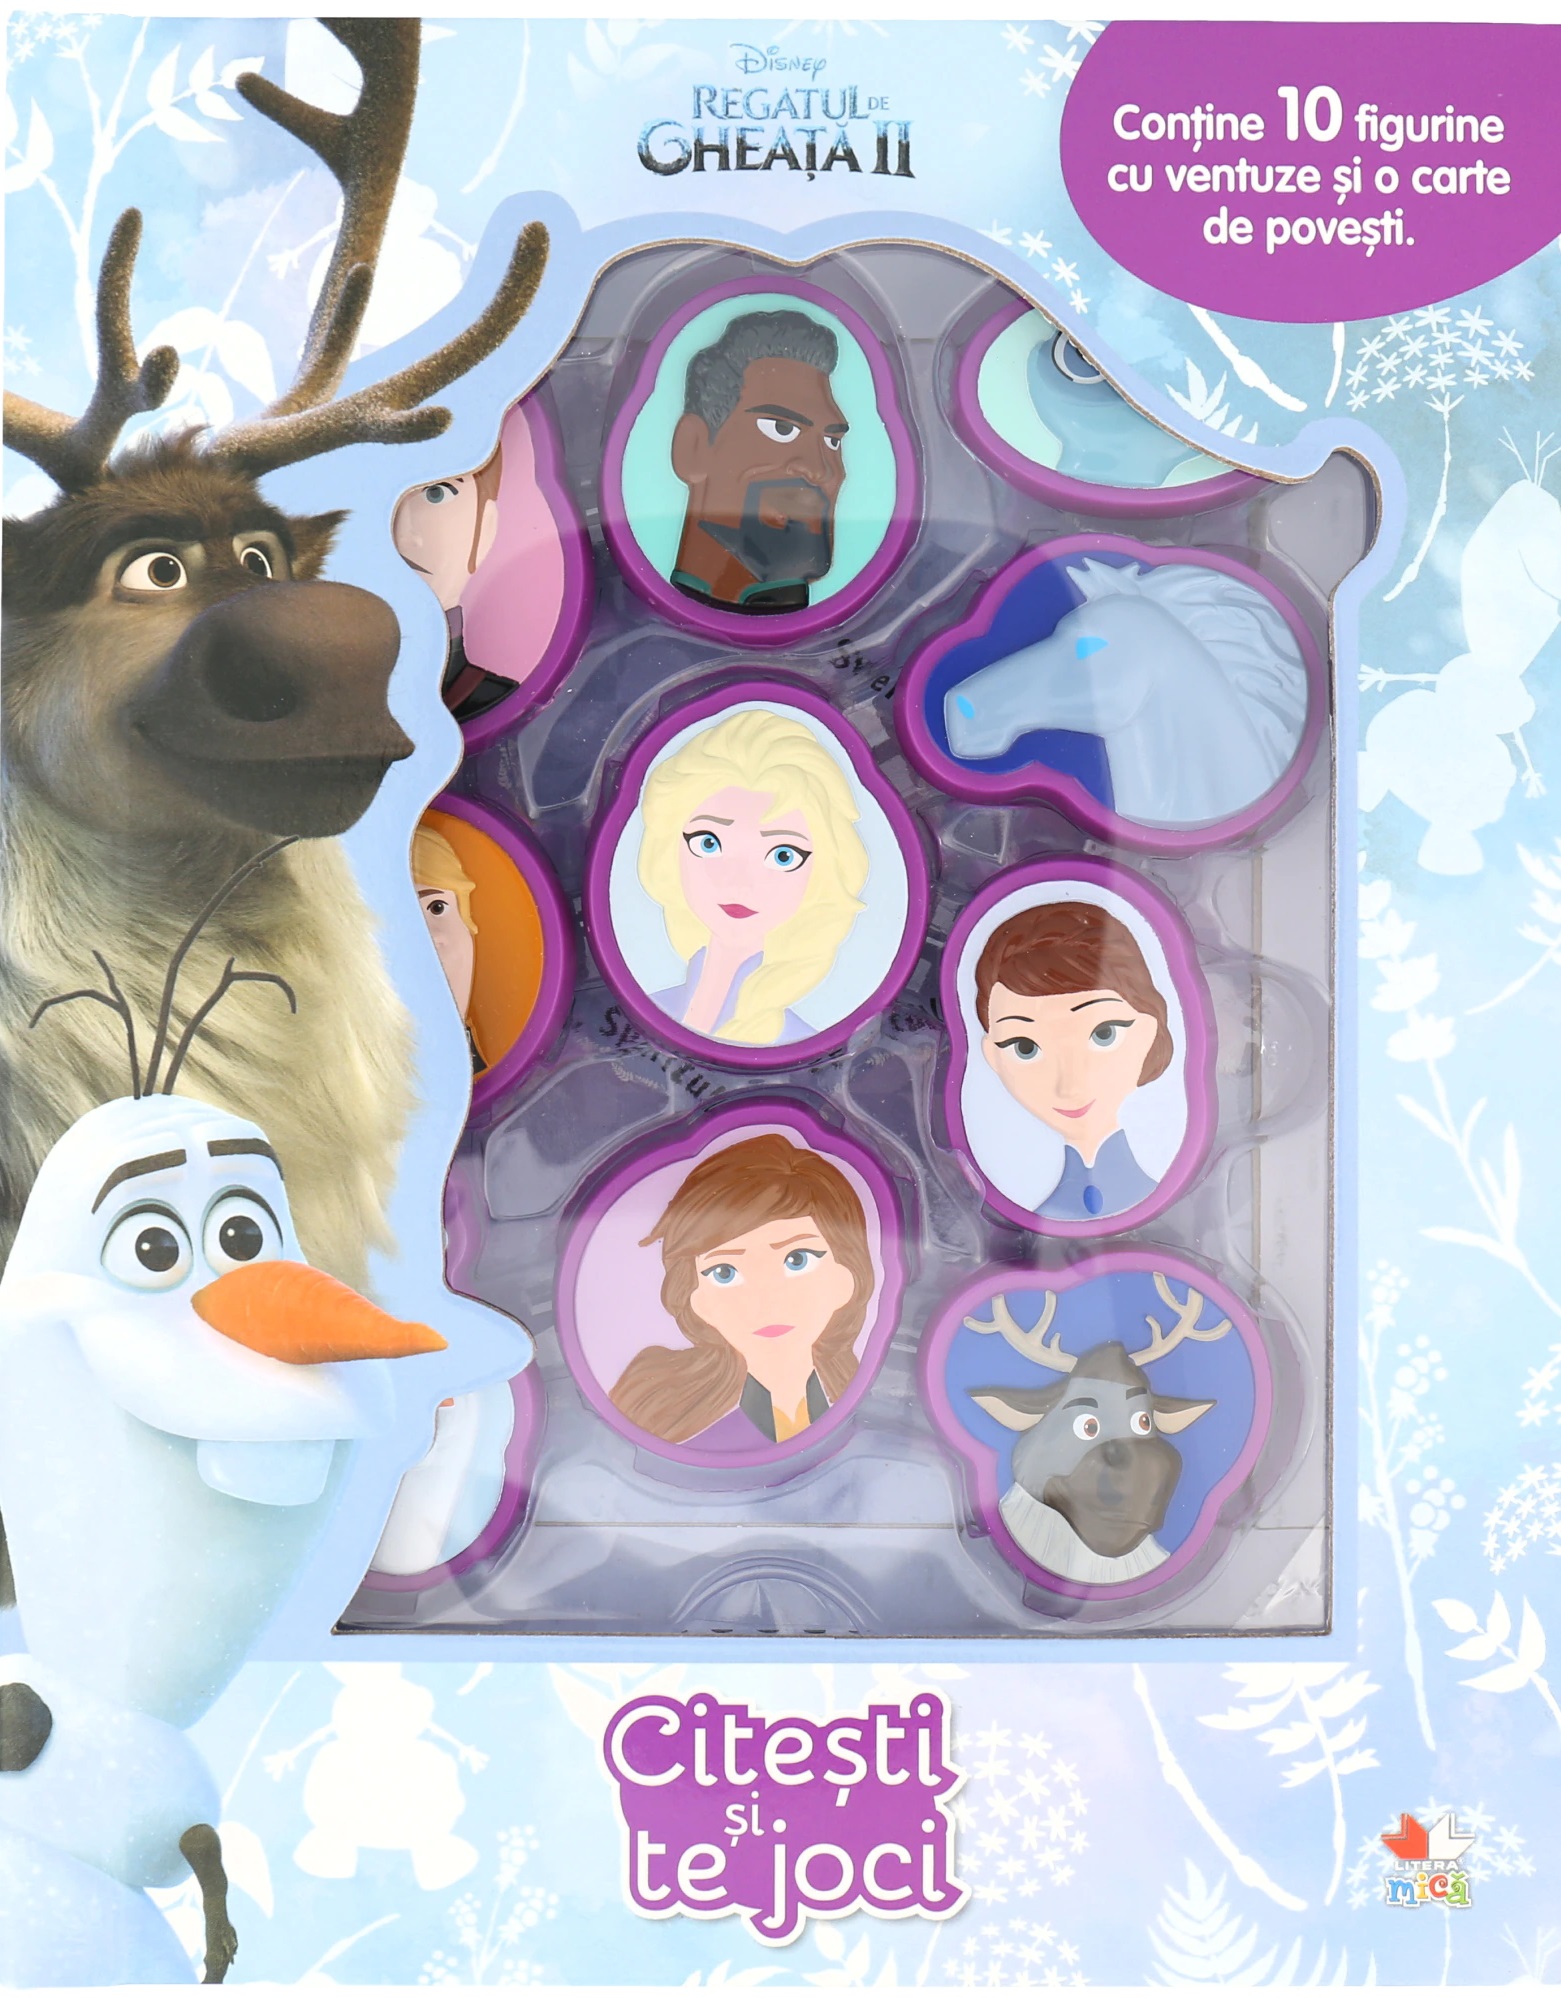 Regatul de gheata II (Frozen II). Citesti si te joci | Disney Pret Mic Carte imagine 2021